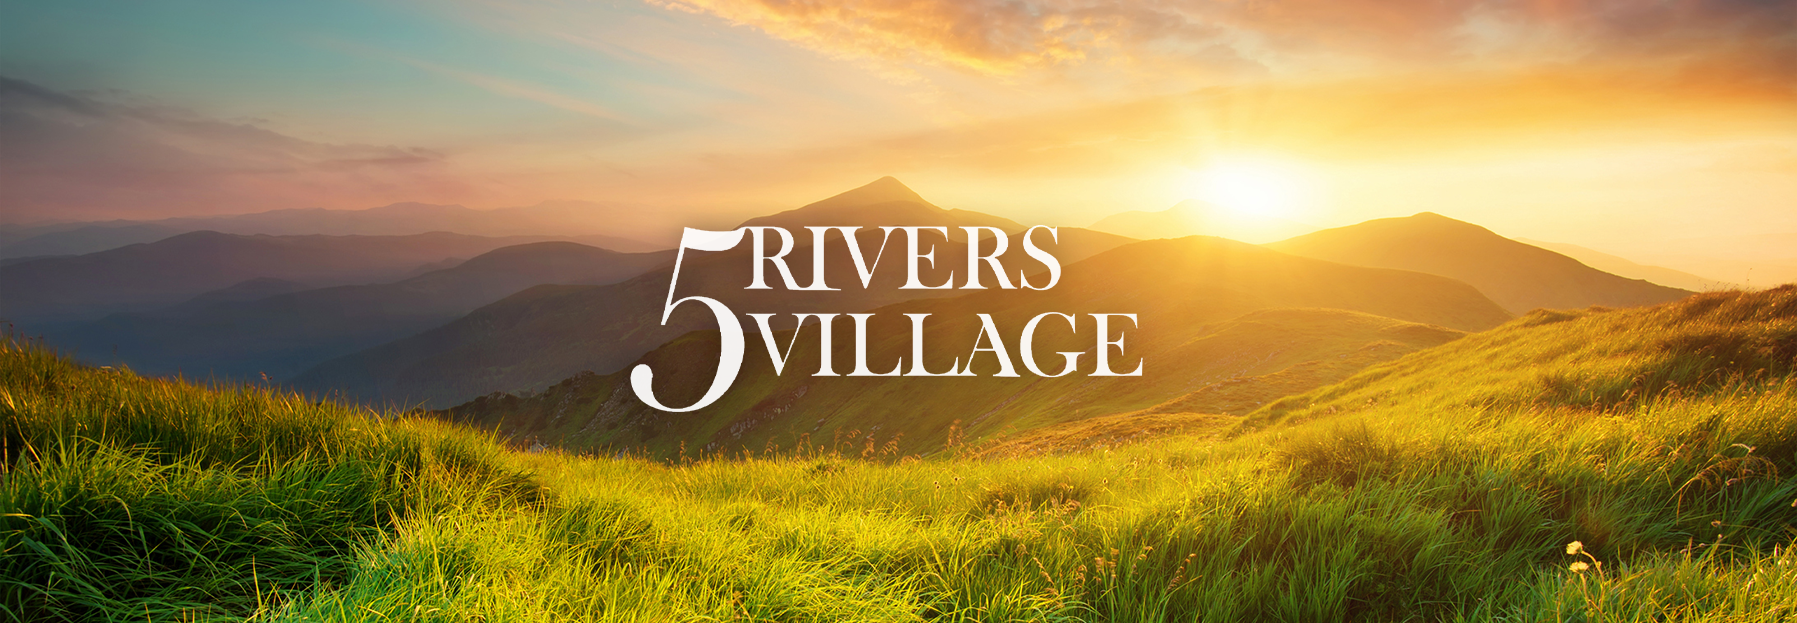 Rivers Village 3